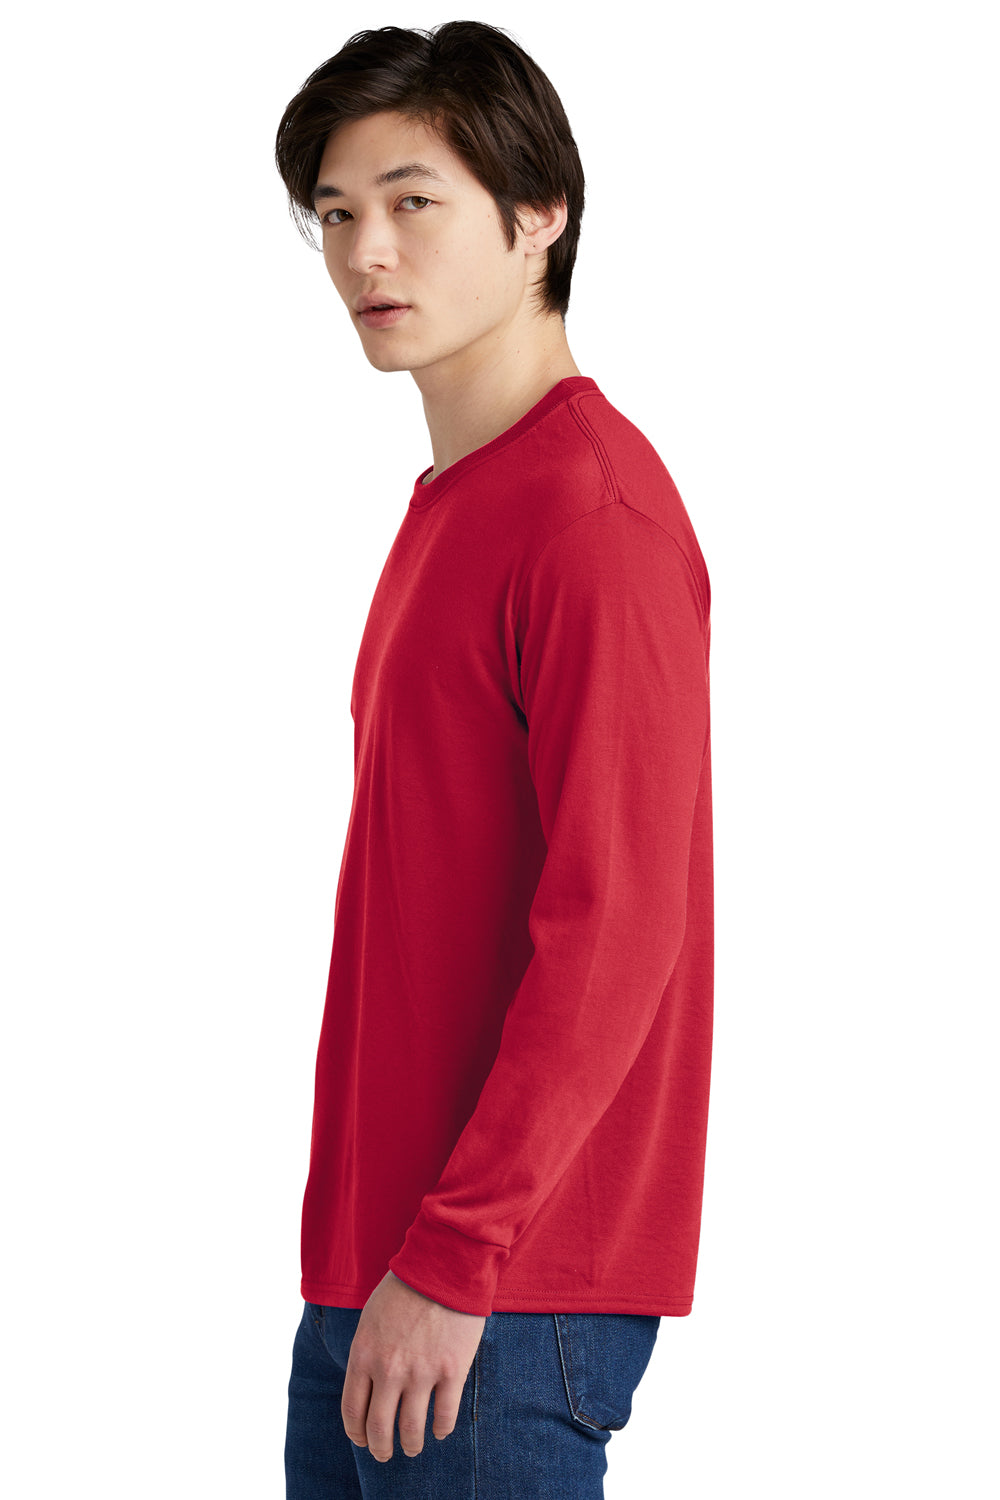 Jerzees 21LS Dri-Power Long Sleeve Crewneck T-Shirt True Red Side